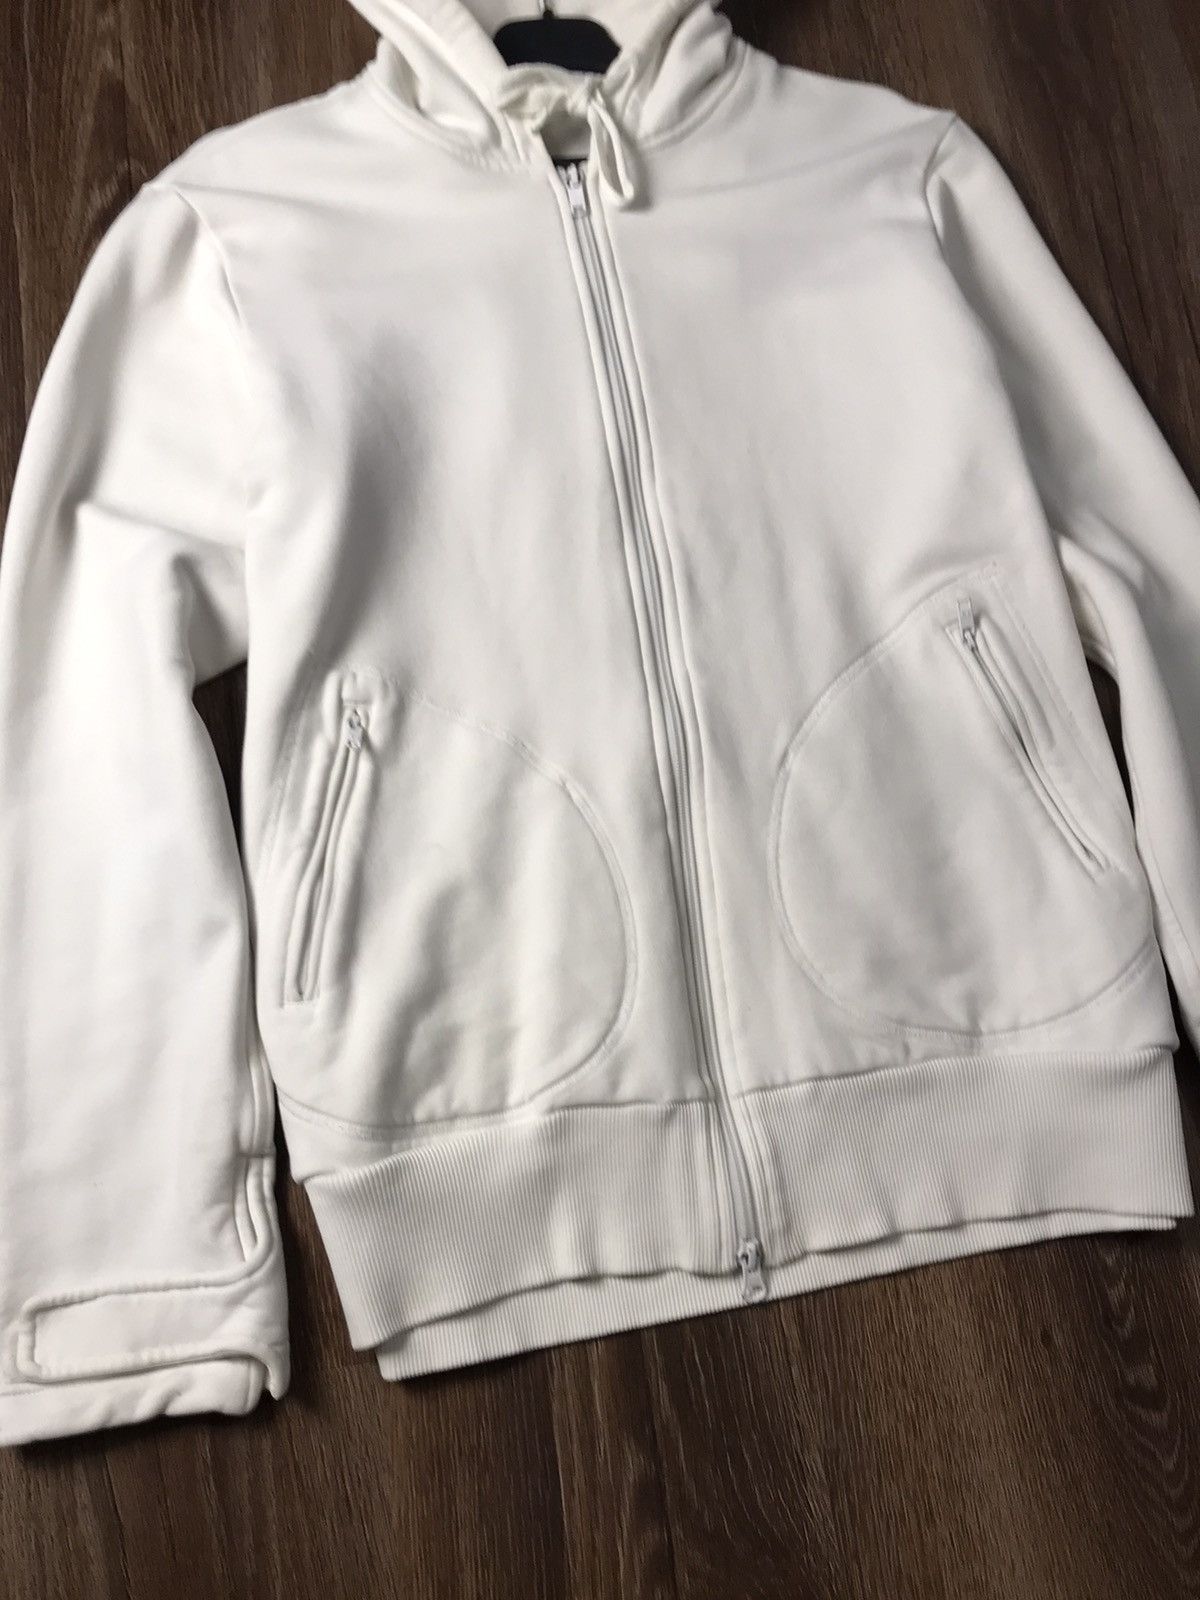 Y-3 Vintage Y-3 Adidas white zip hoodie Size US XL / EU 56 / 4 - 11 Thumbnail